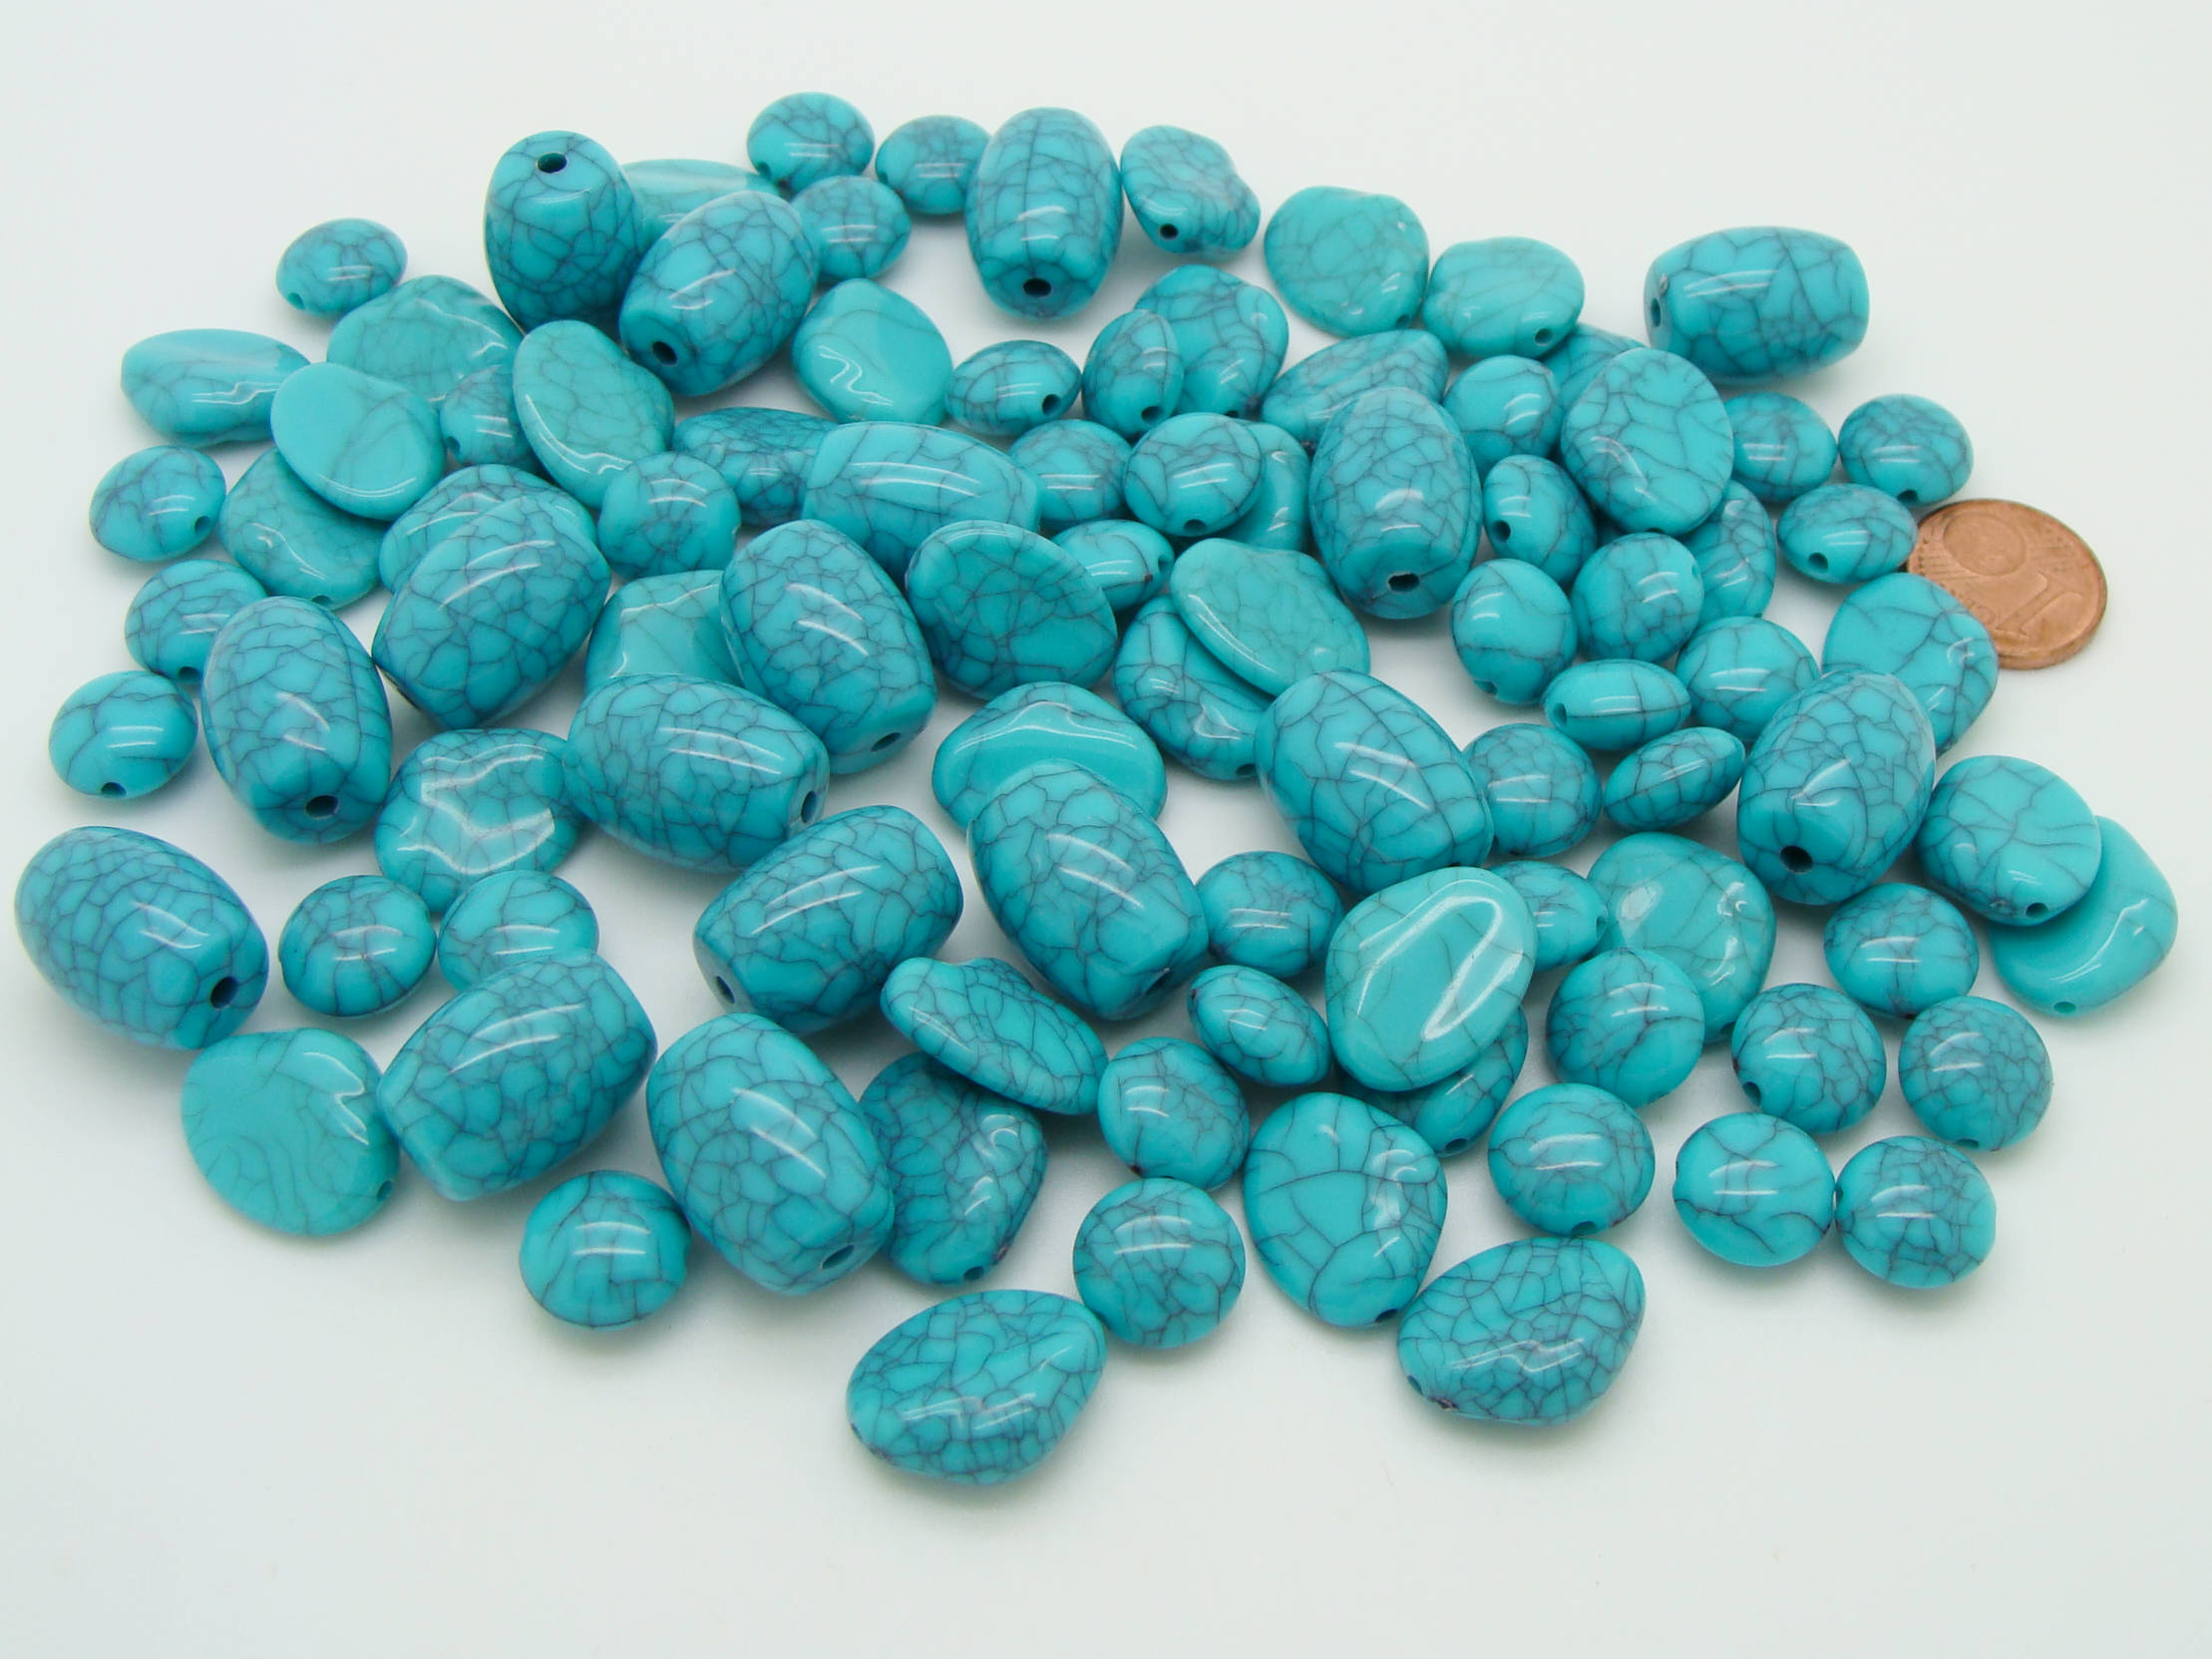 acry-75g-turquoise perle acrylique aspect turquoise